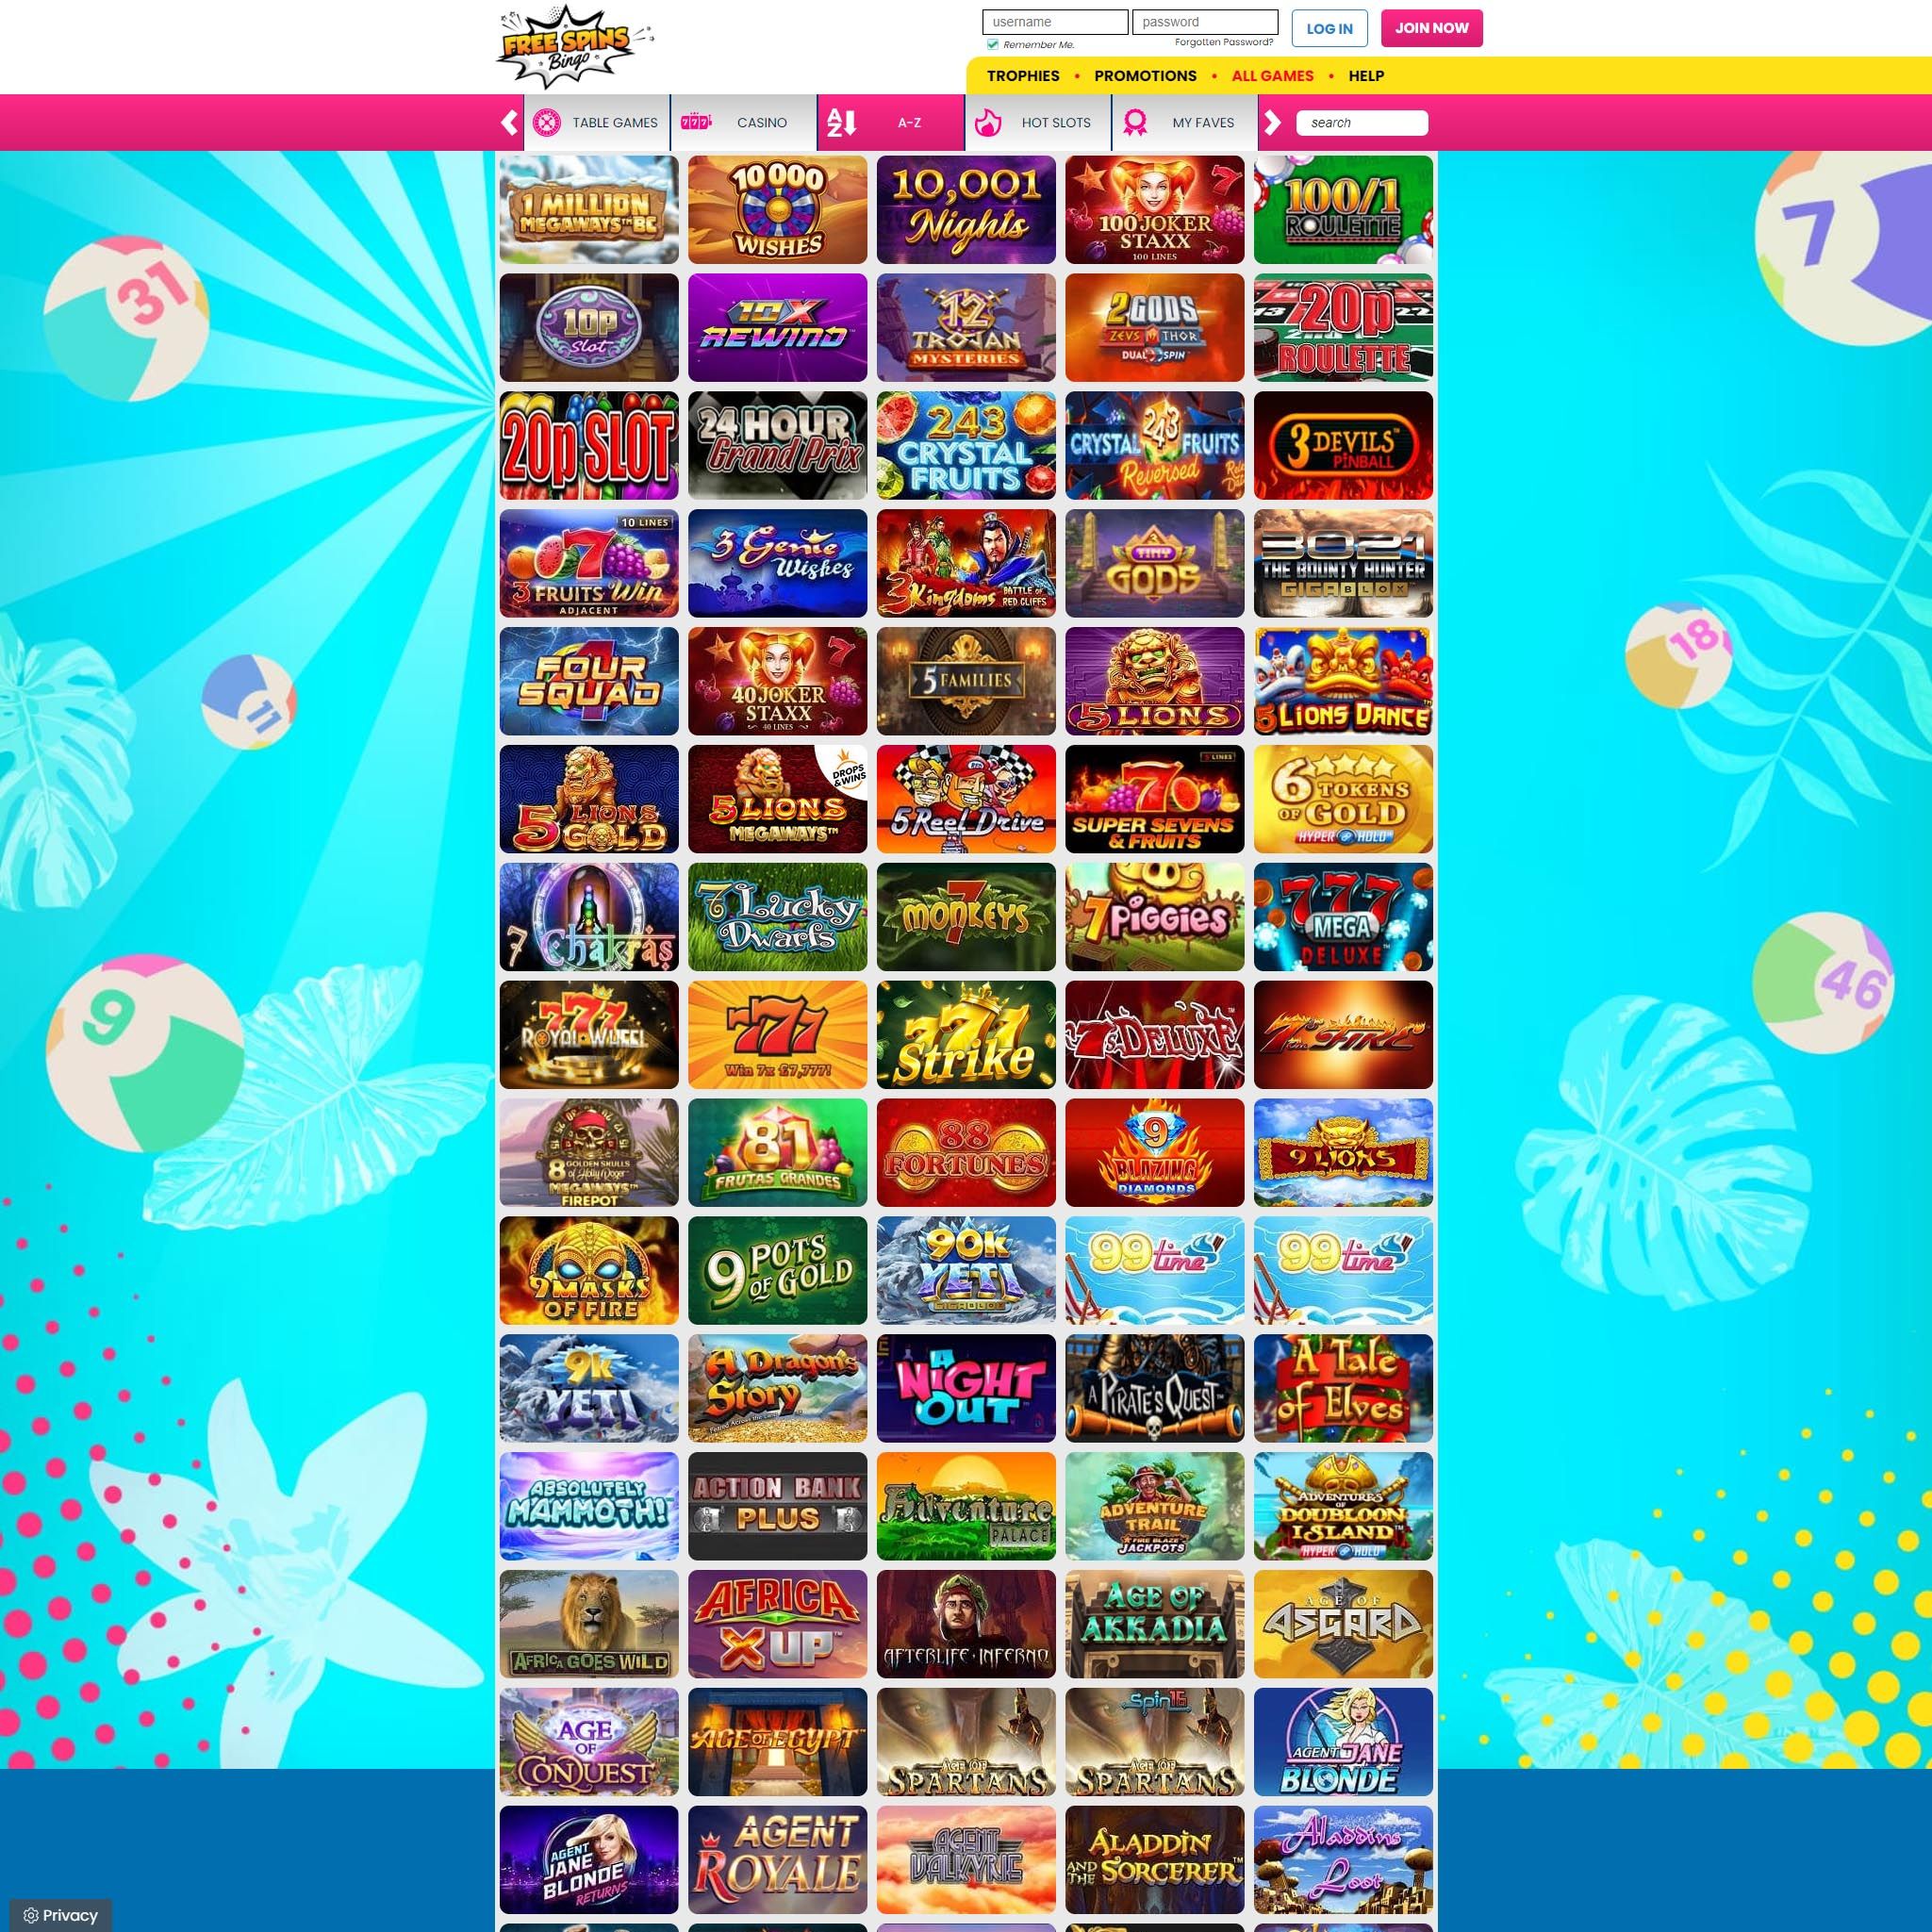 Free Spins Bingo full games catalogue